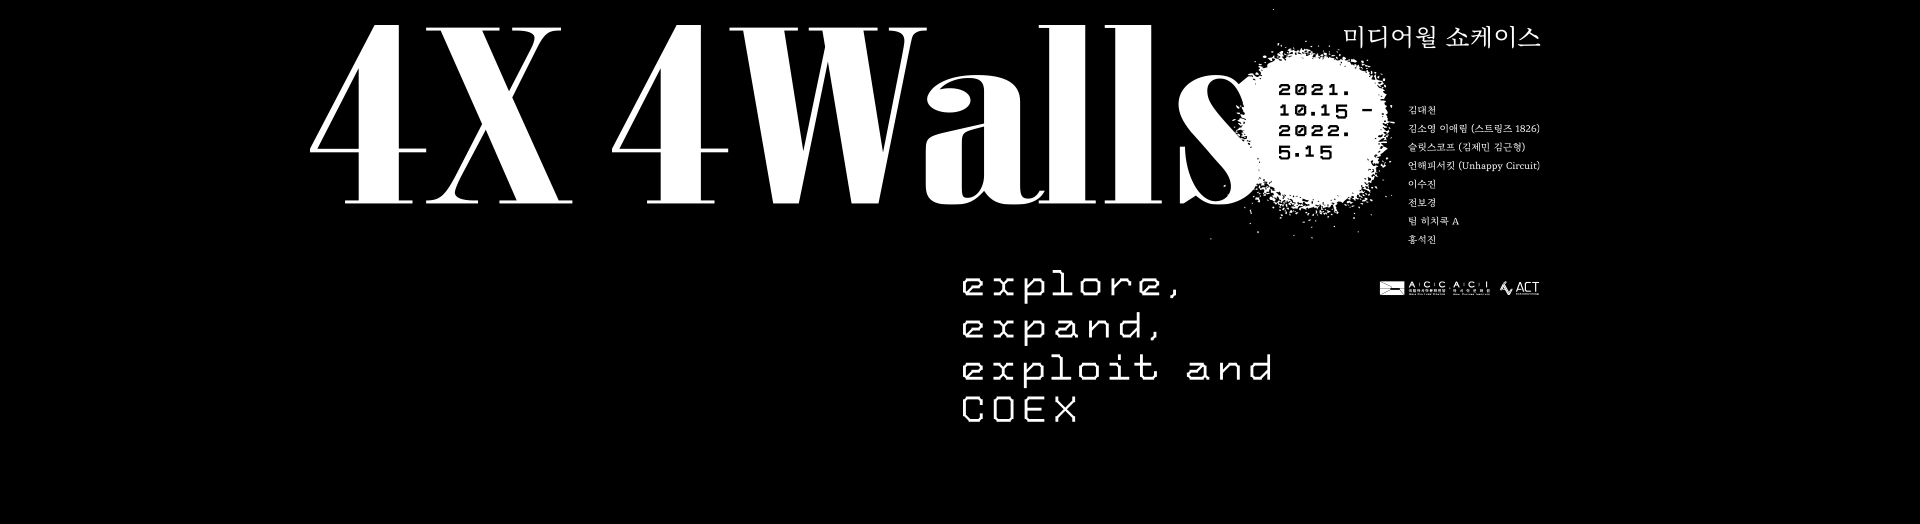 Media Wall Showcase 4X 4WALLS